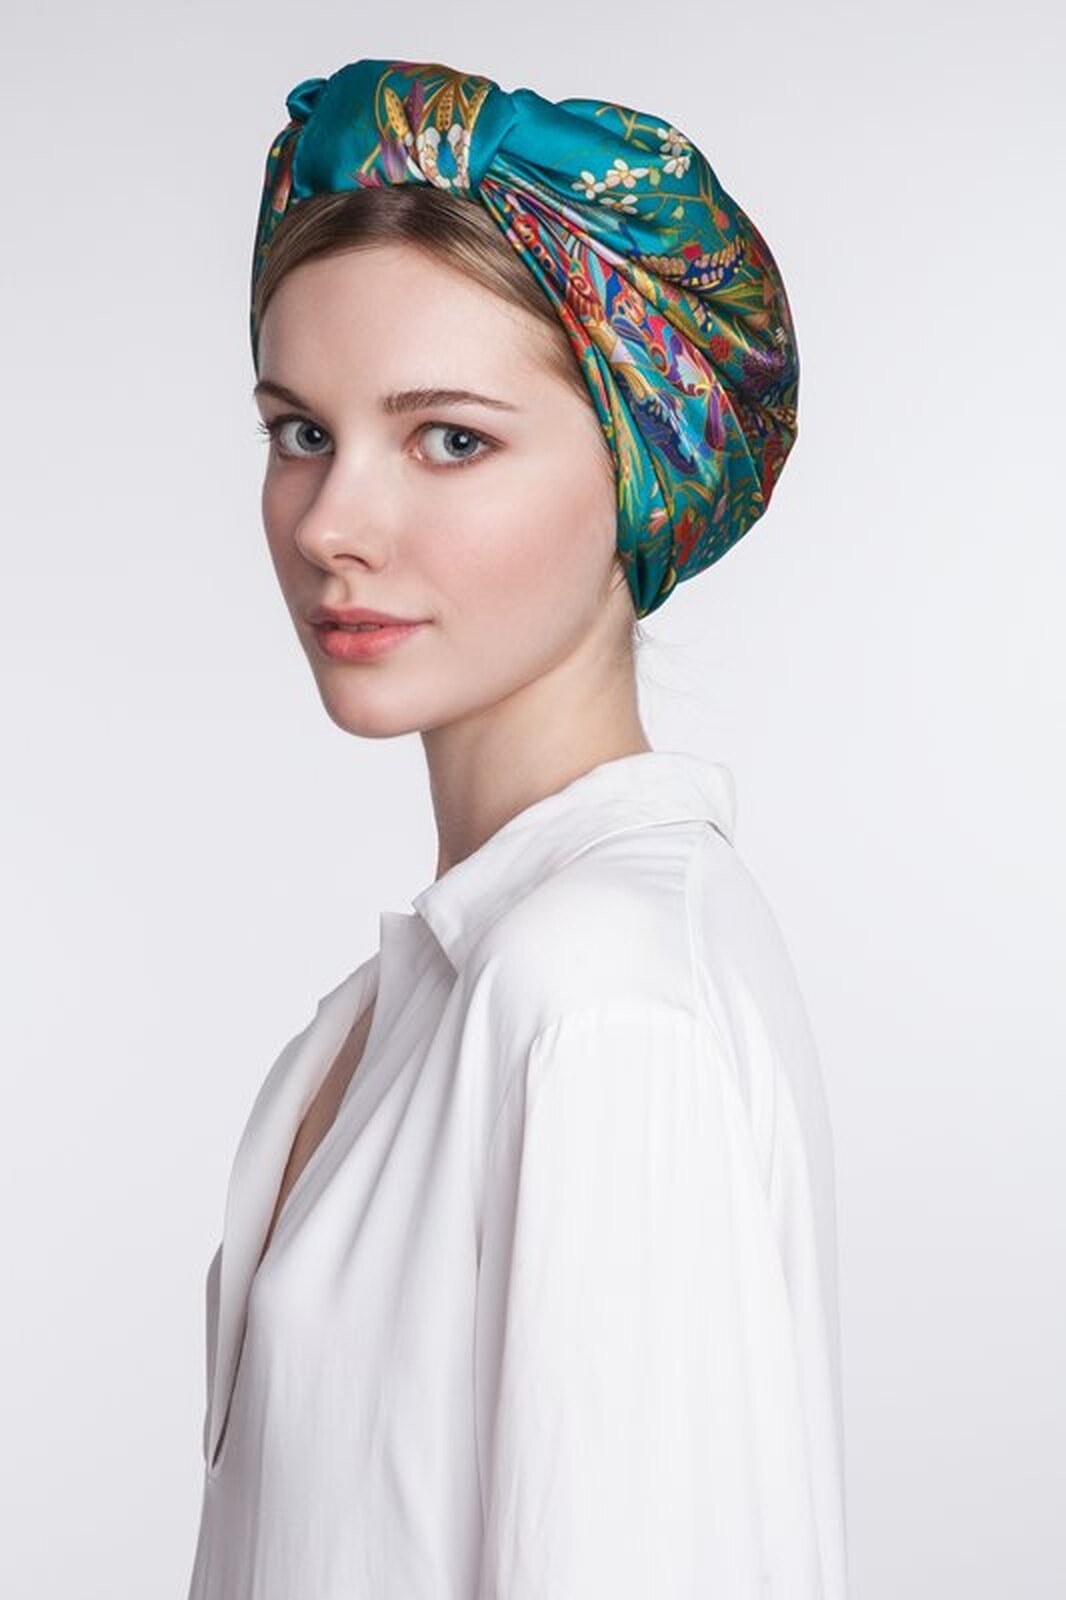 красиво завязанный платок на голове фото